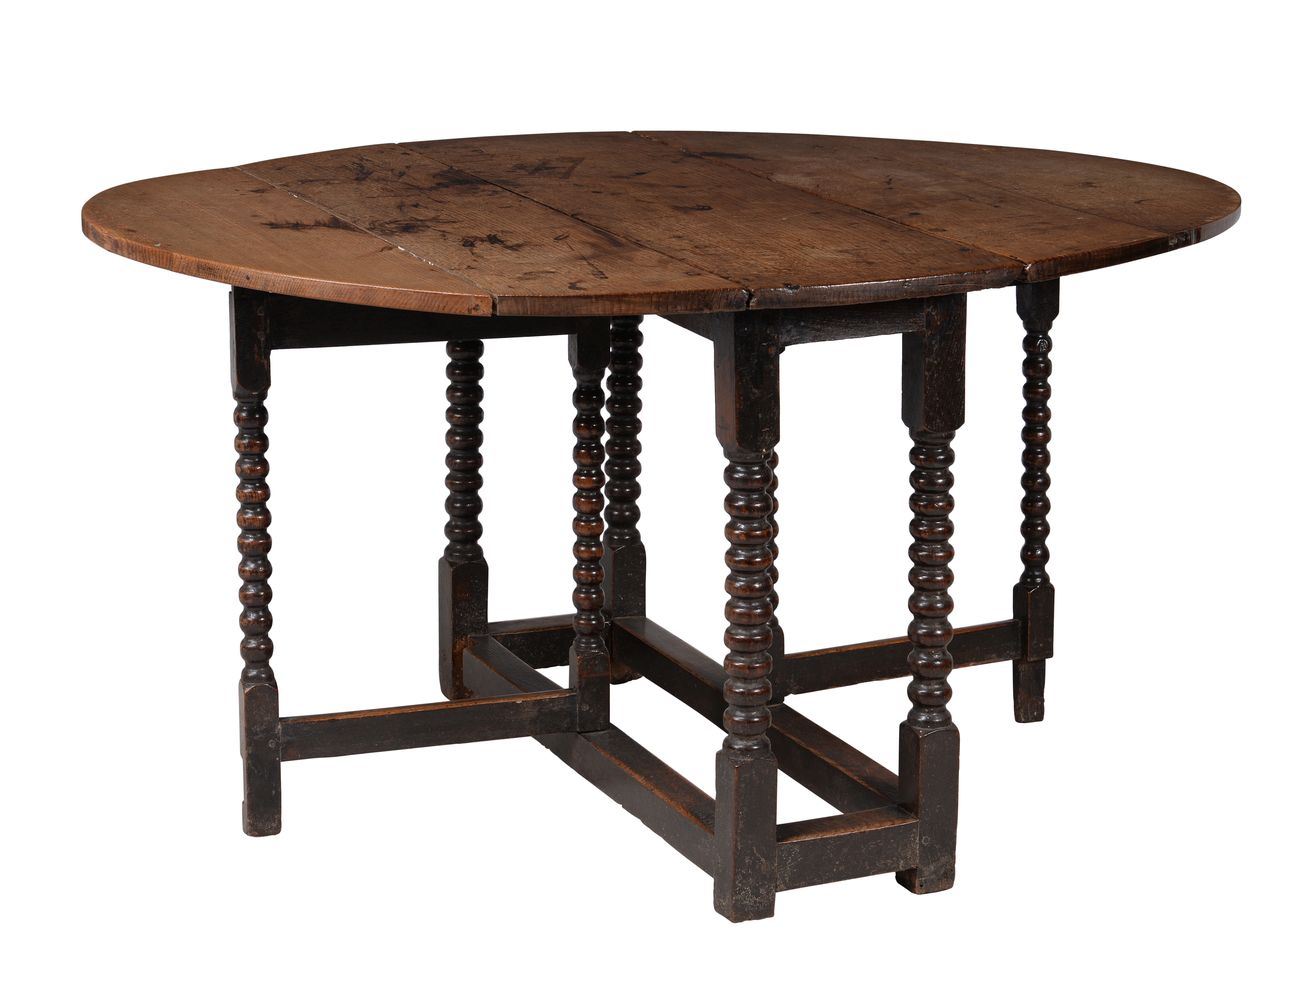 A William III oak gateleg table